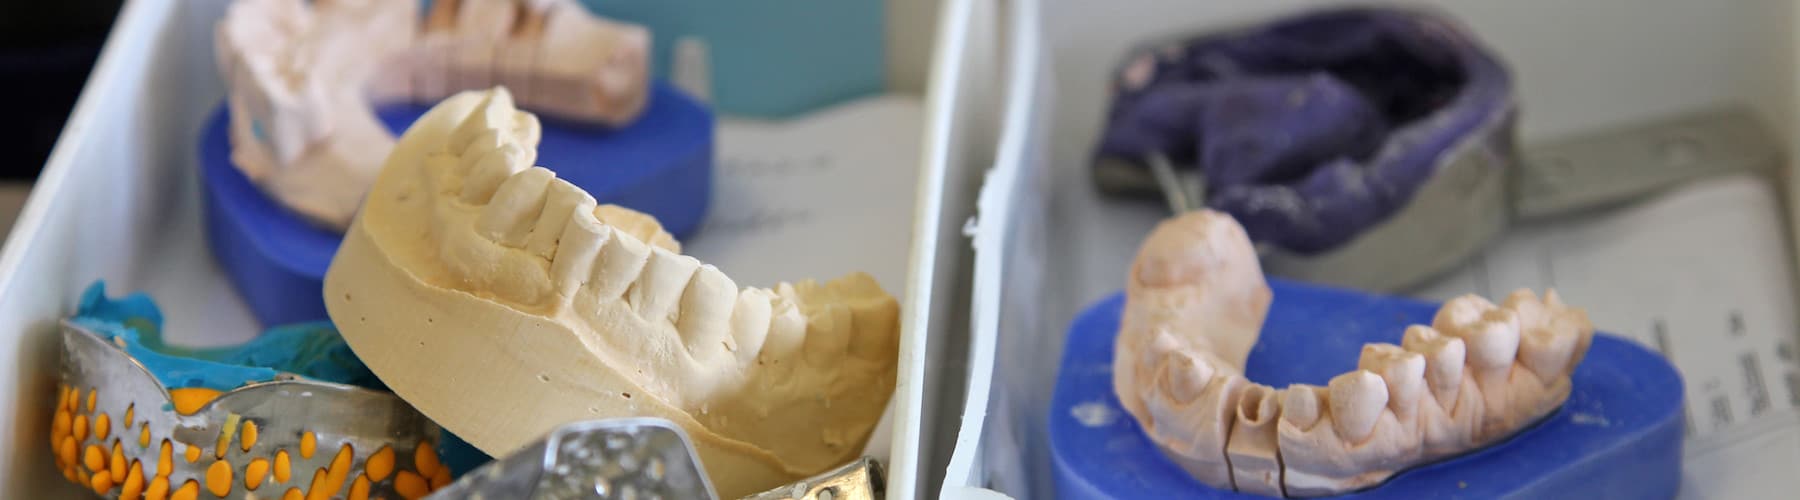 Dental Team - laboratorio odontotecnico a Firenze